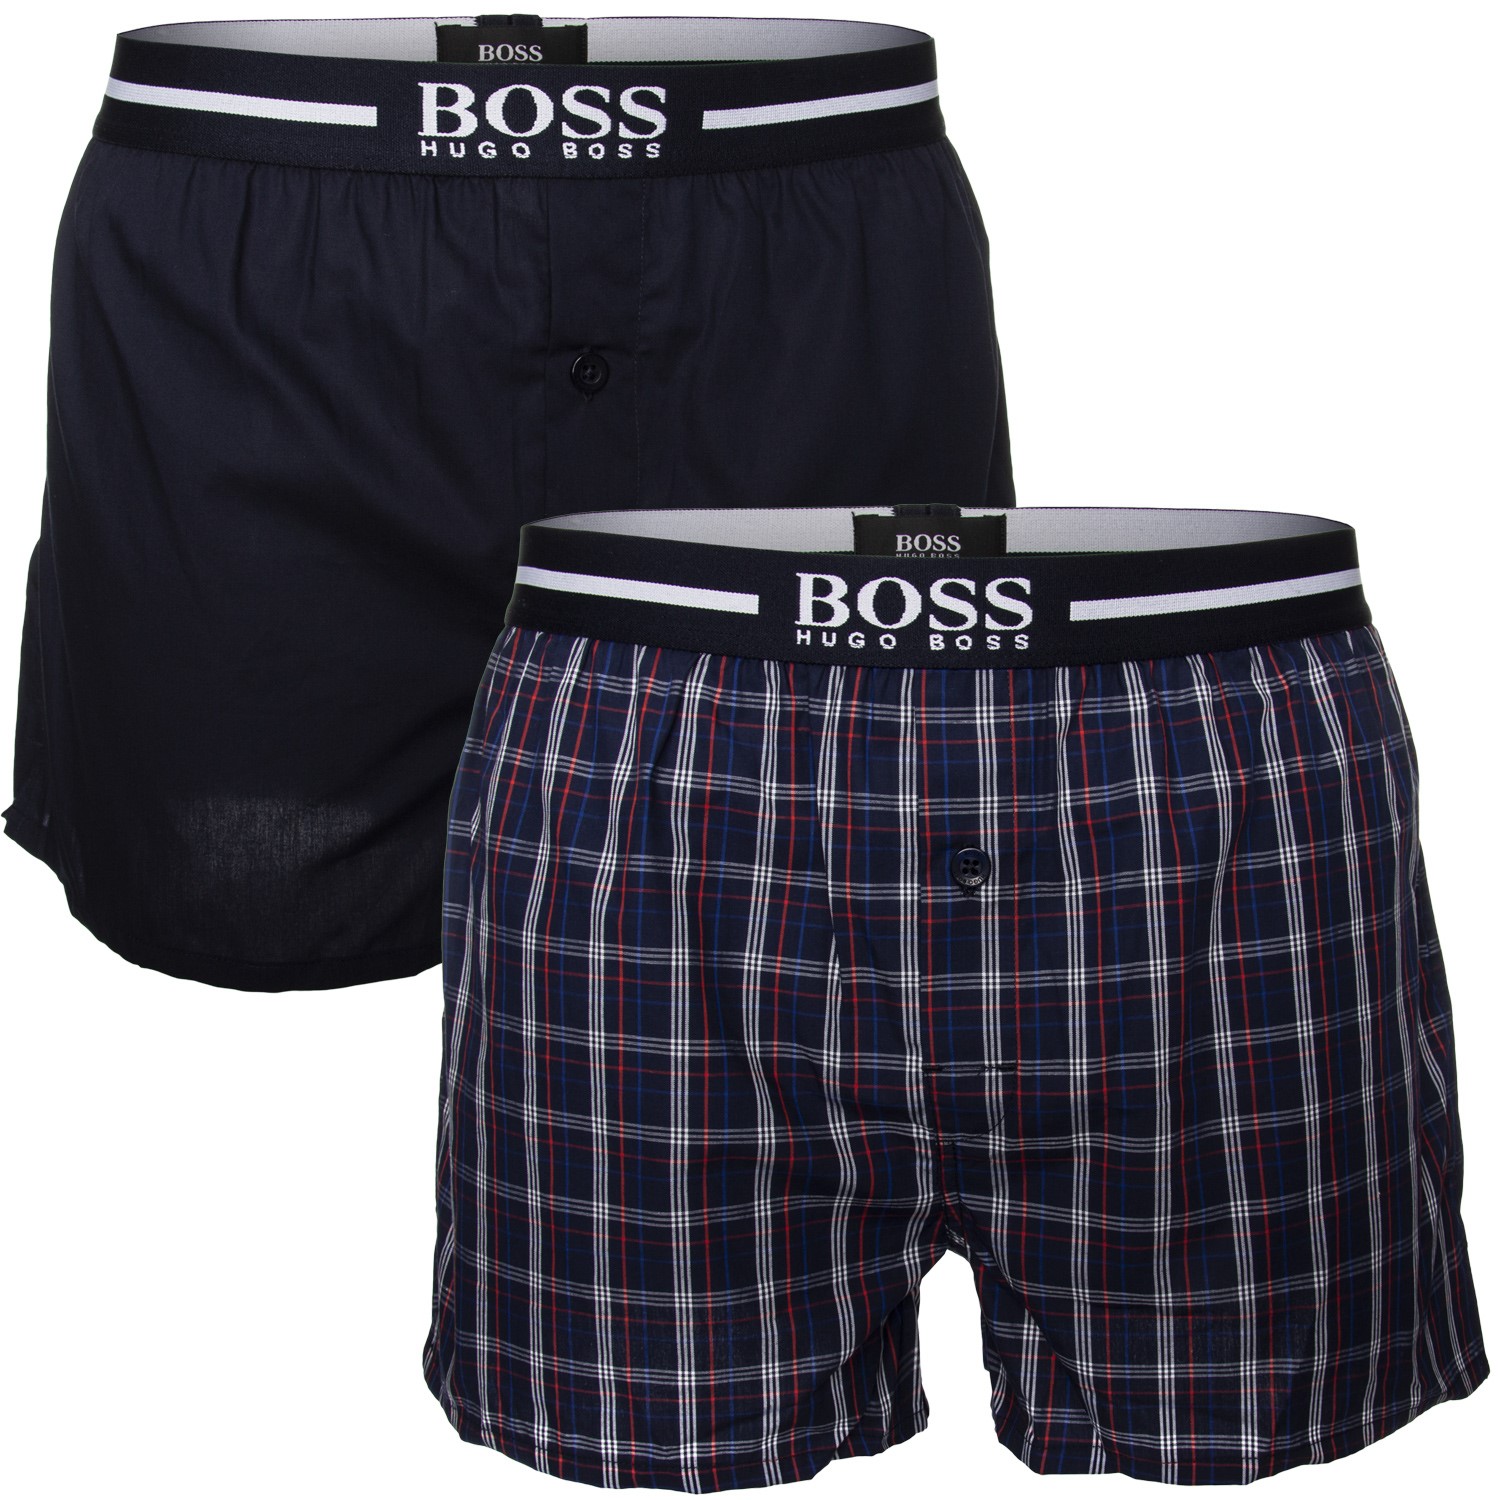 boss boxers